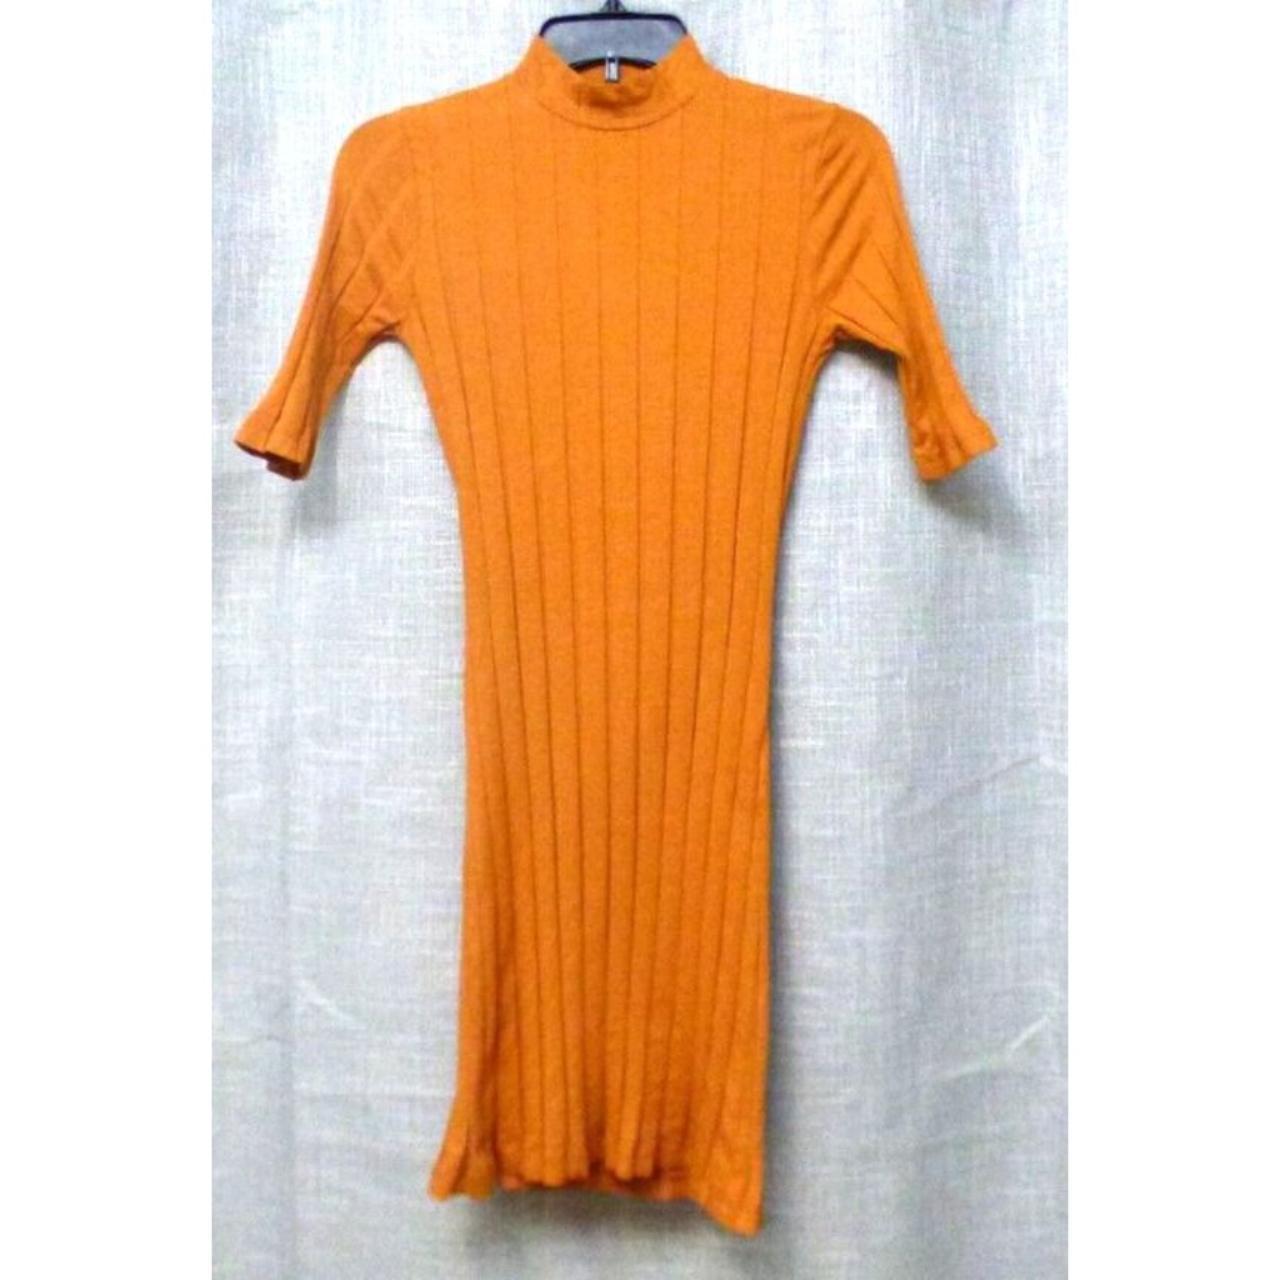 Monrow Elbow-Sleeve Polo Sweater Dress